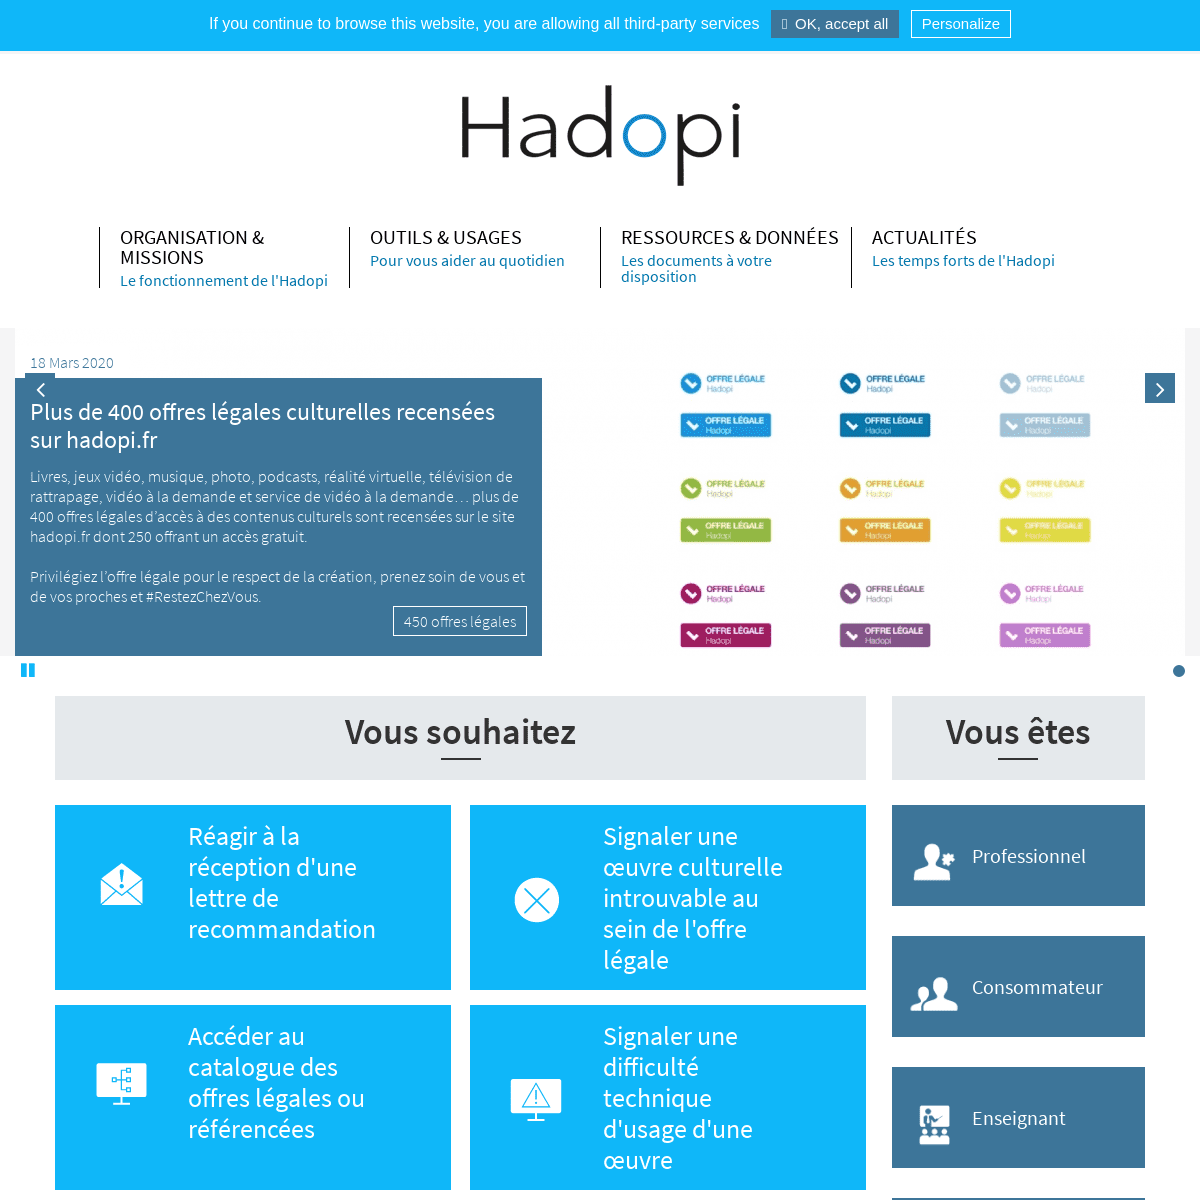 A complete backup of hadopi.fr